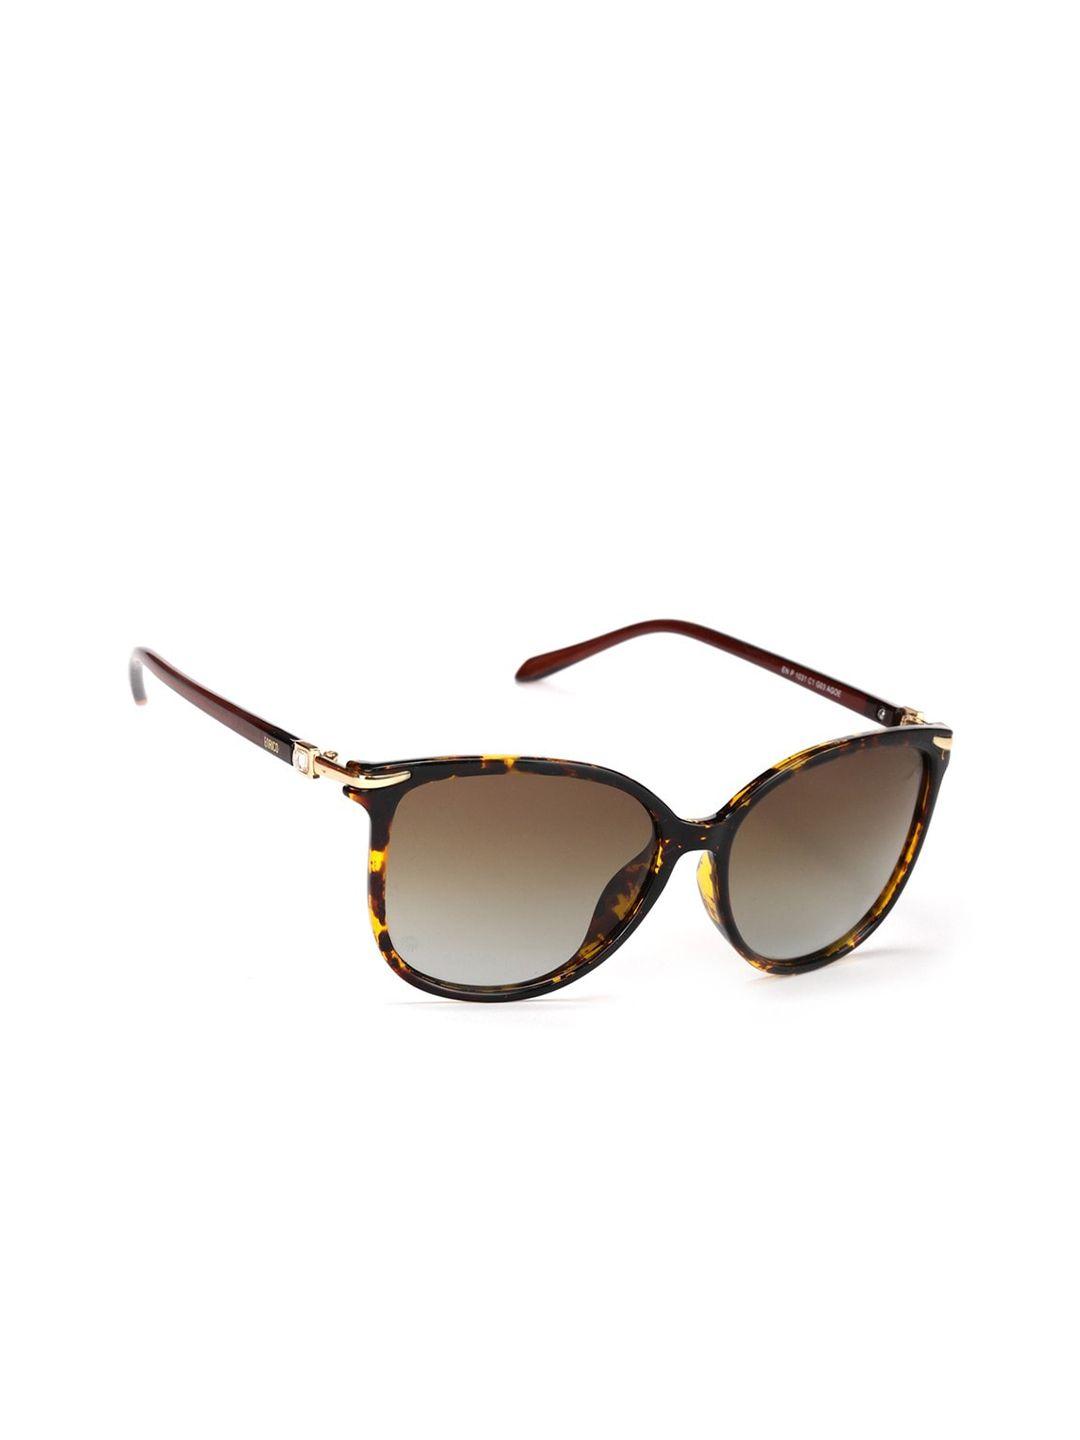 enrico women brown lens & yellow square sunglasses - en p 1031 c1-brown